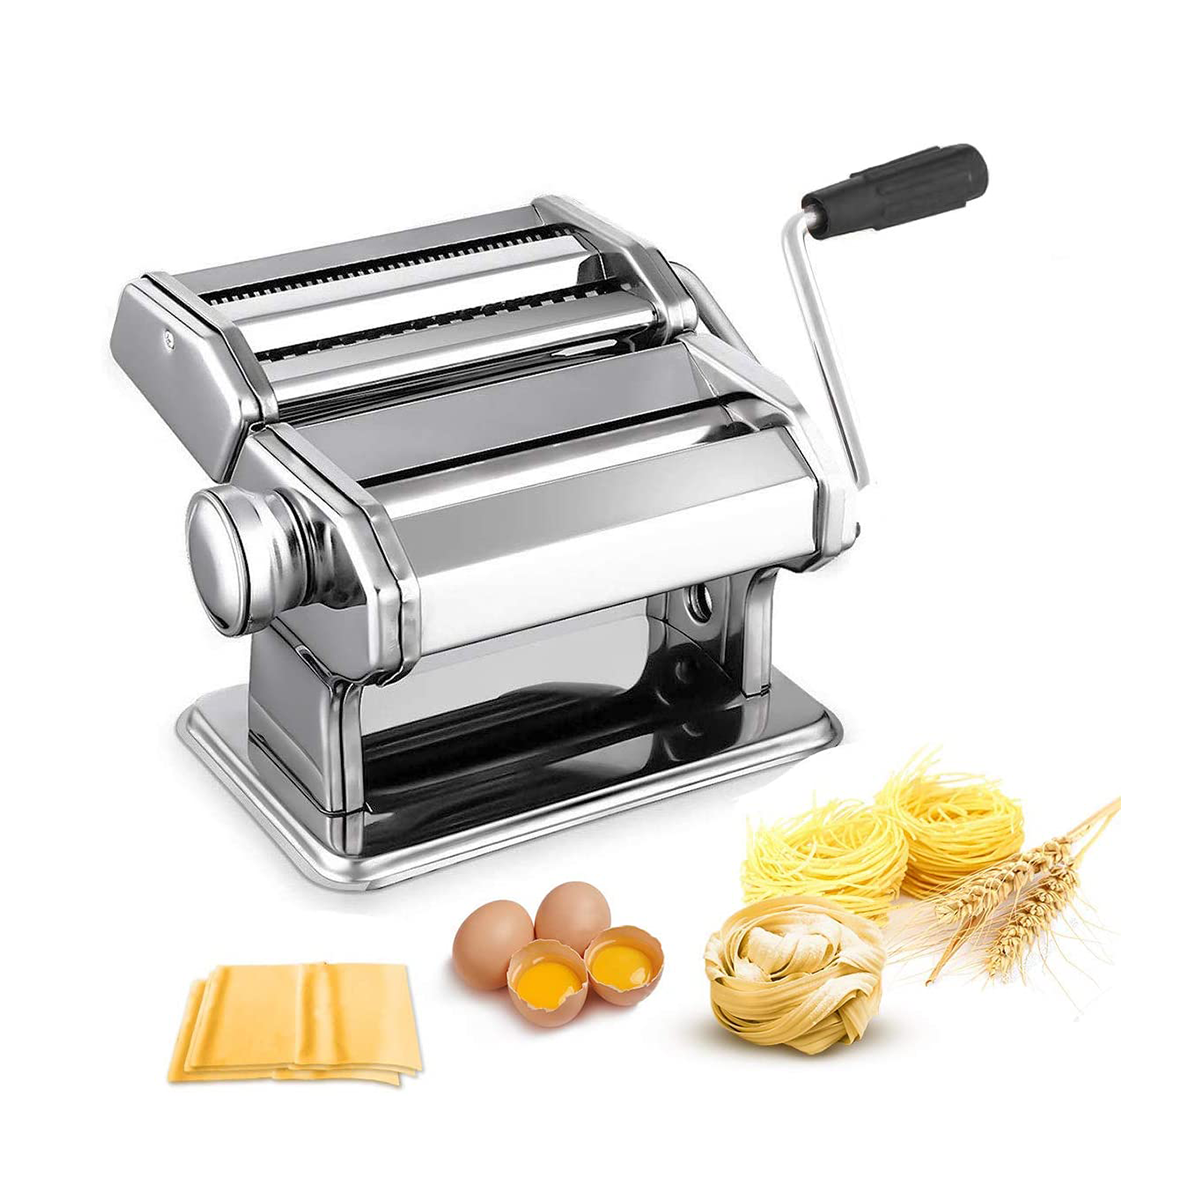 Manual pasta machine, two pieces